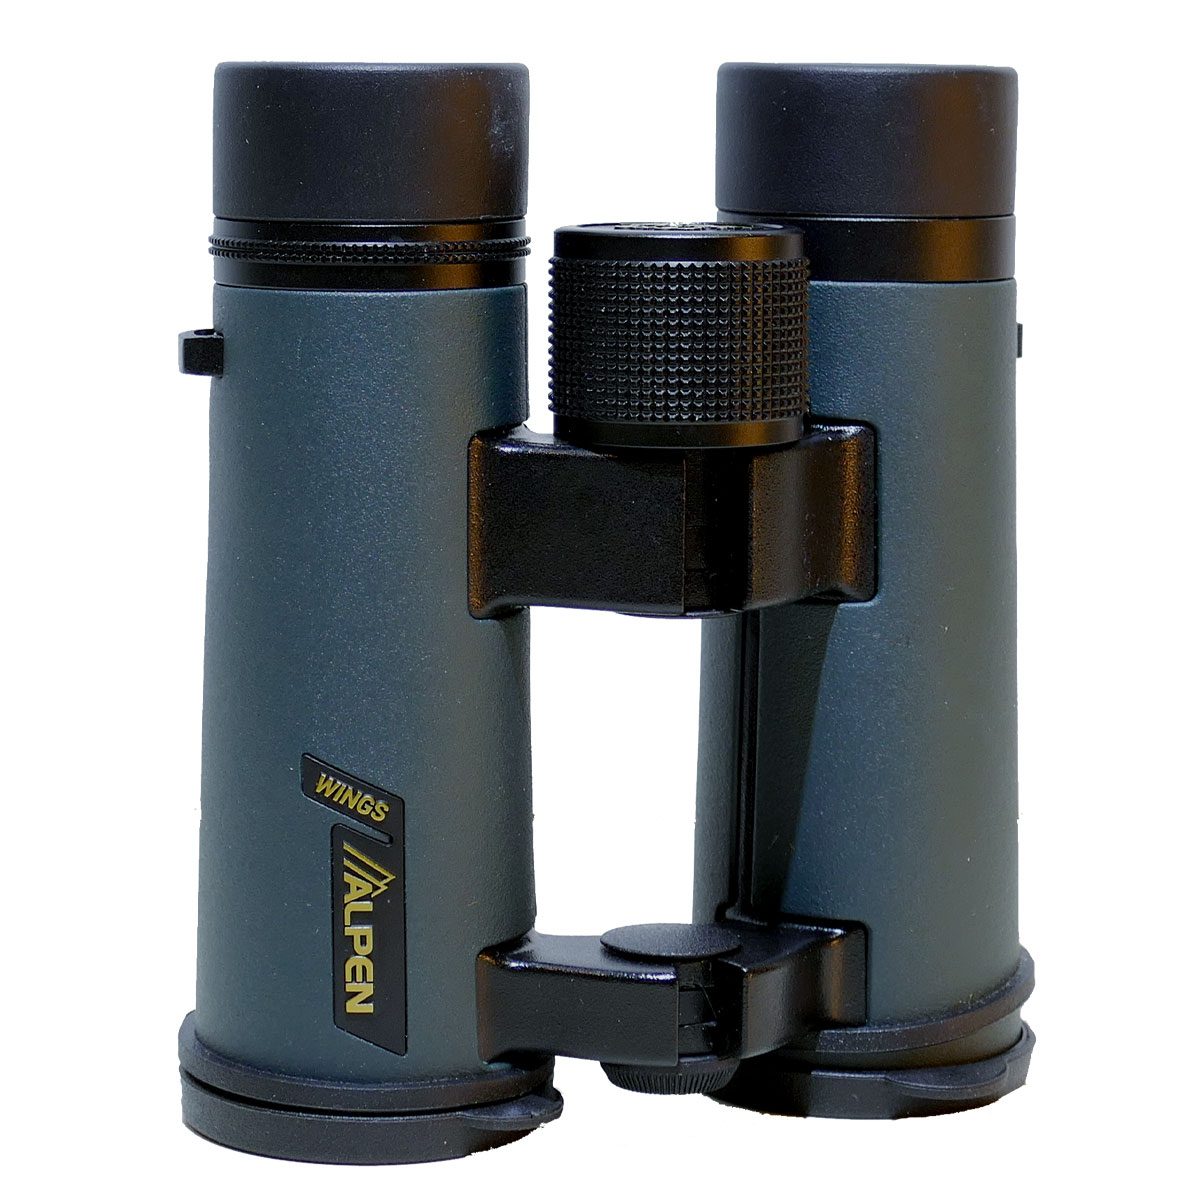 green-blue and black binoculars